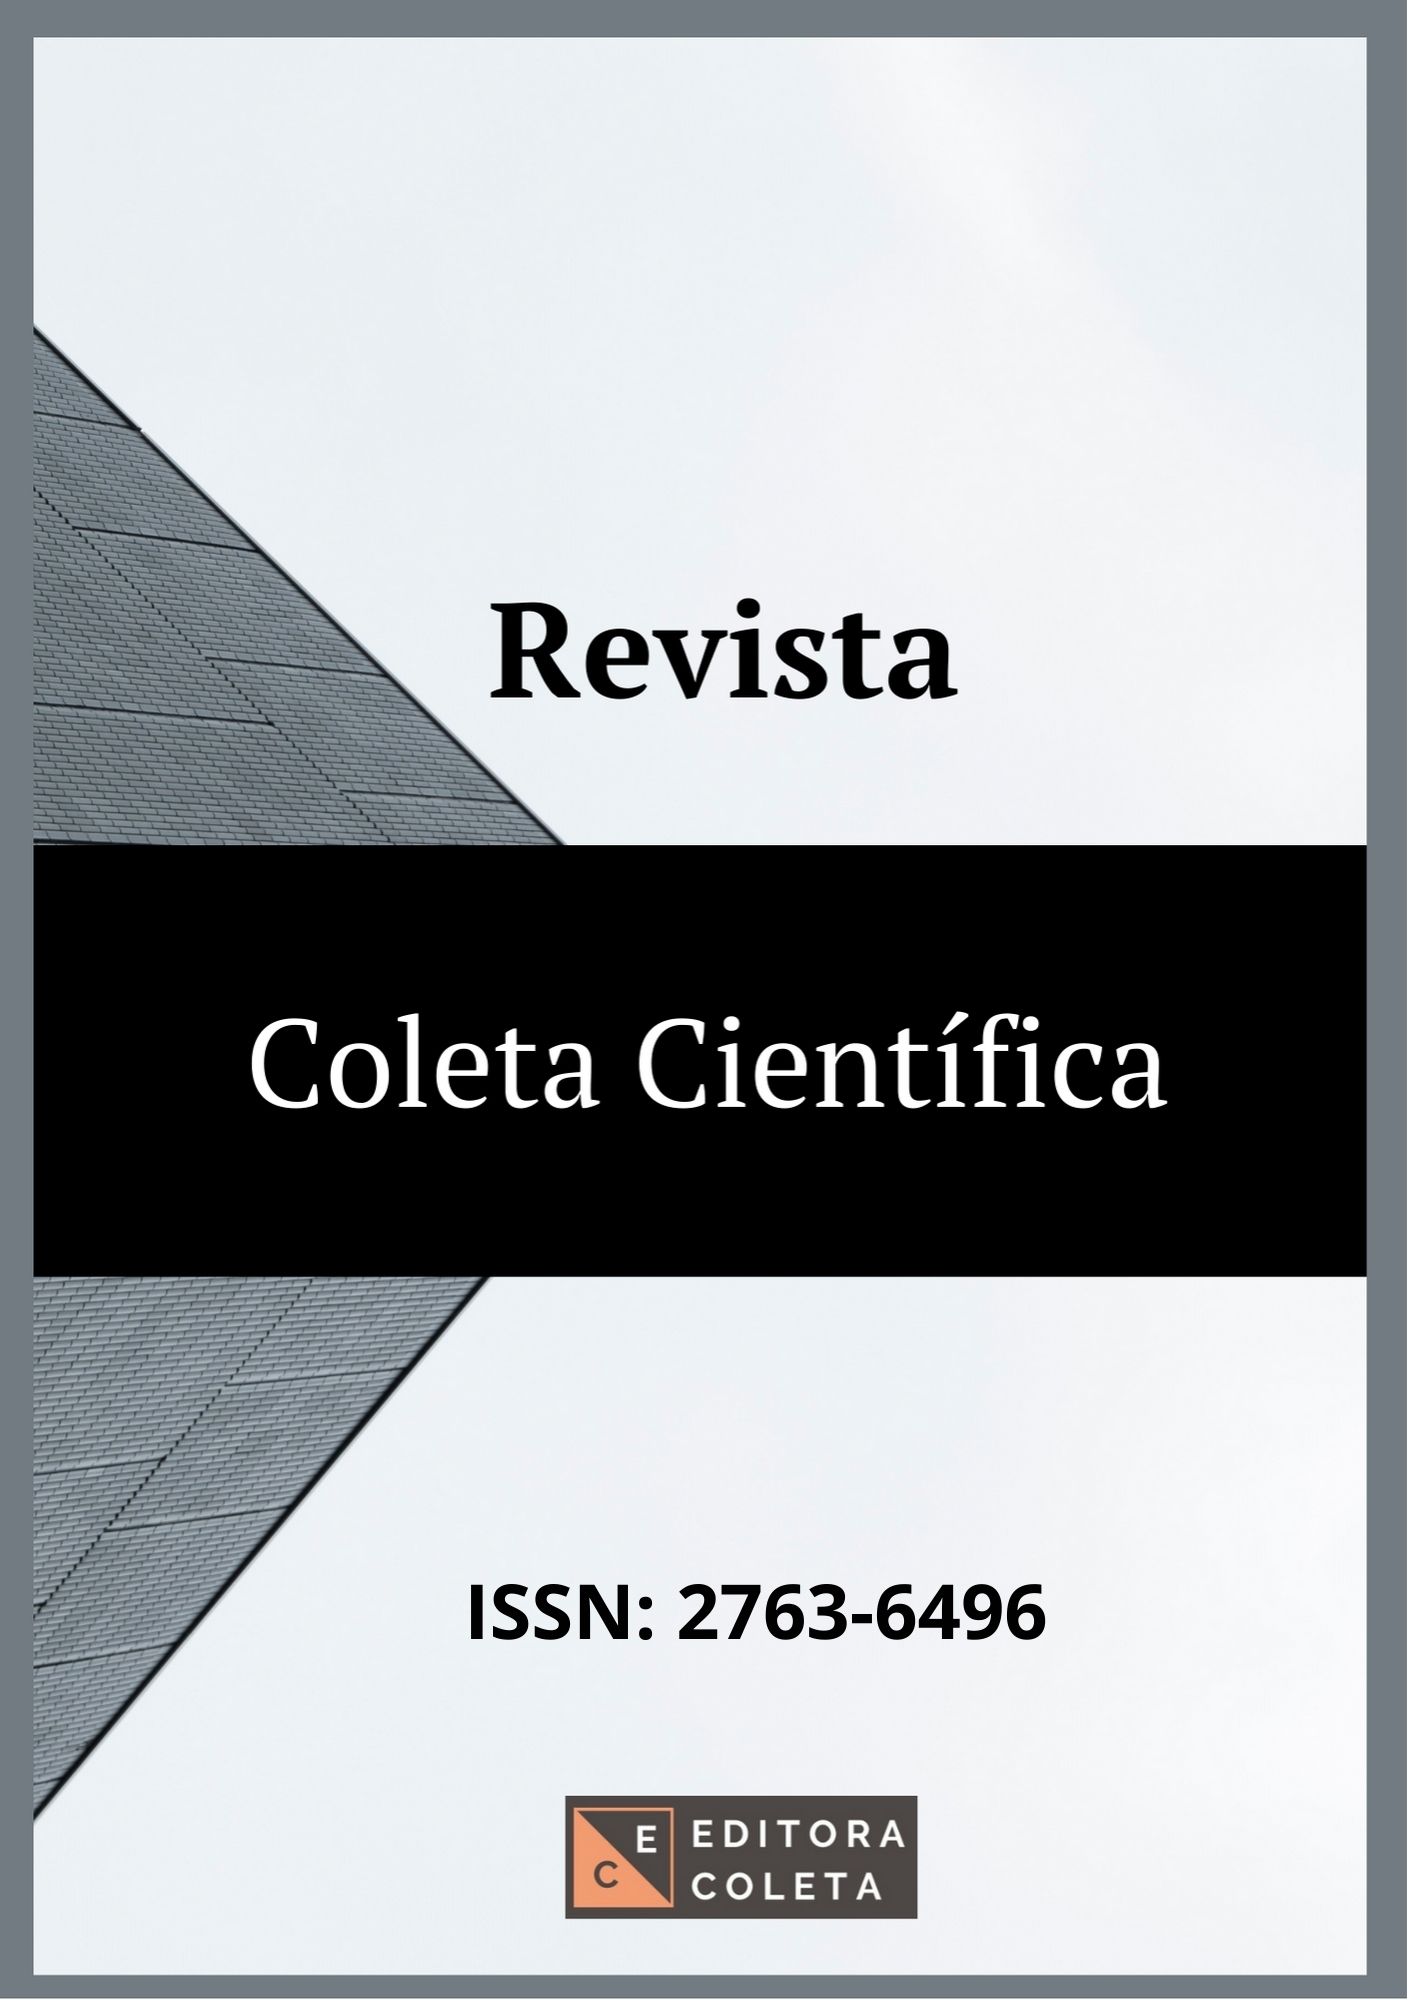 					Visualizar v. 1 n. 2 (2017): Revista Coleta Científica
				